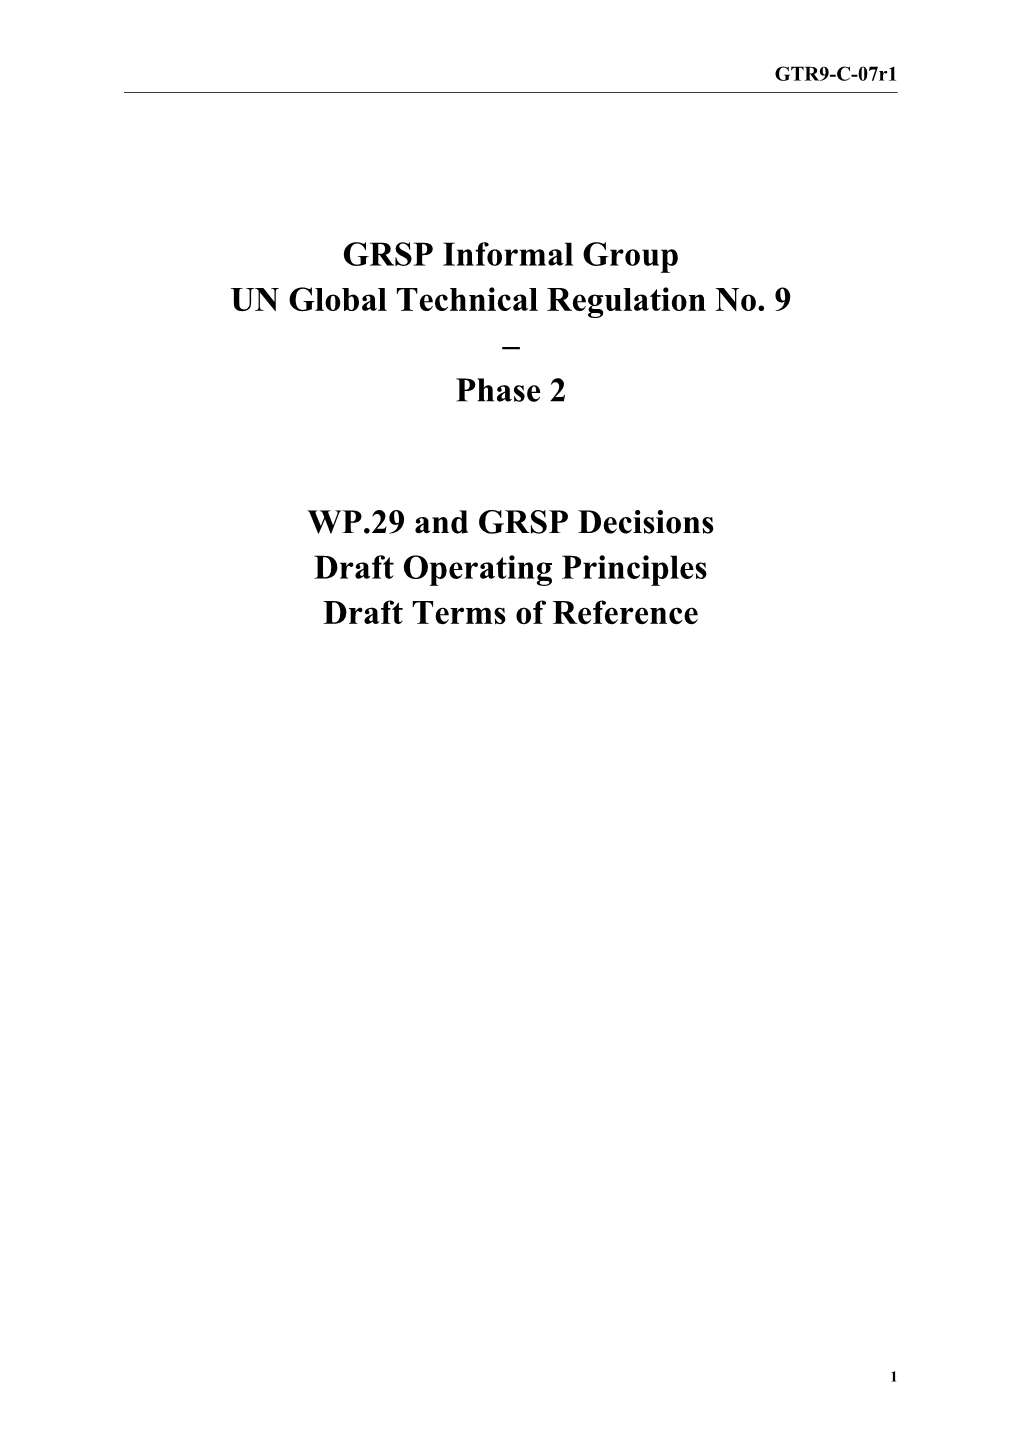 GRSP Informal Group on a Pole Side Impact GTR